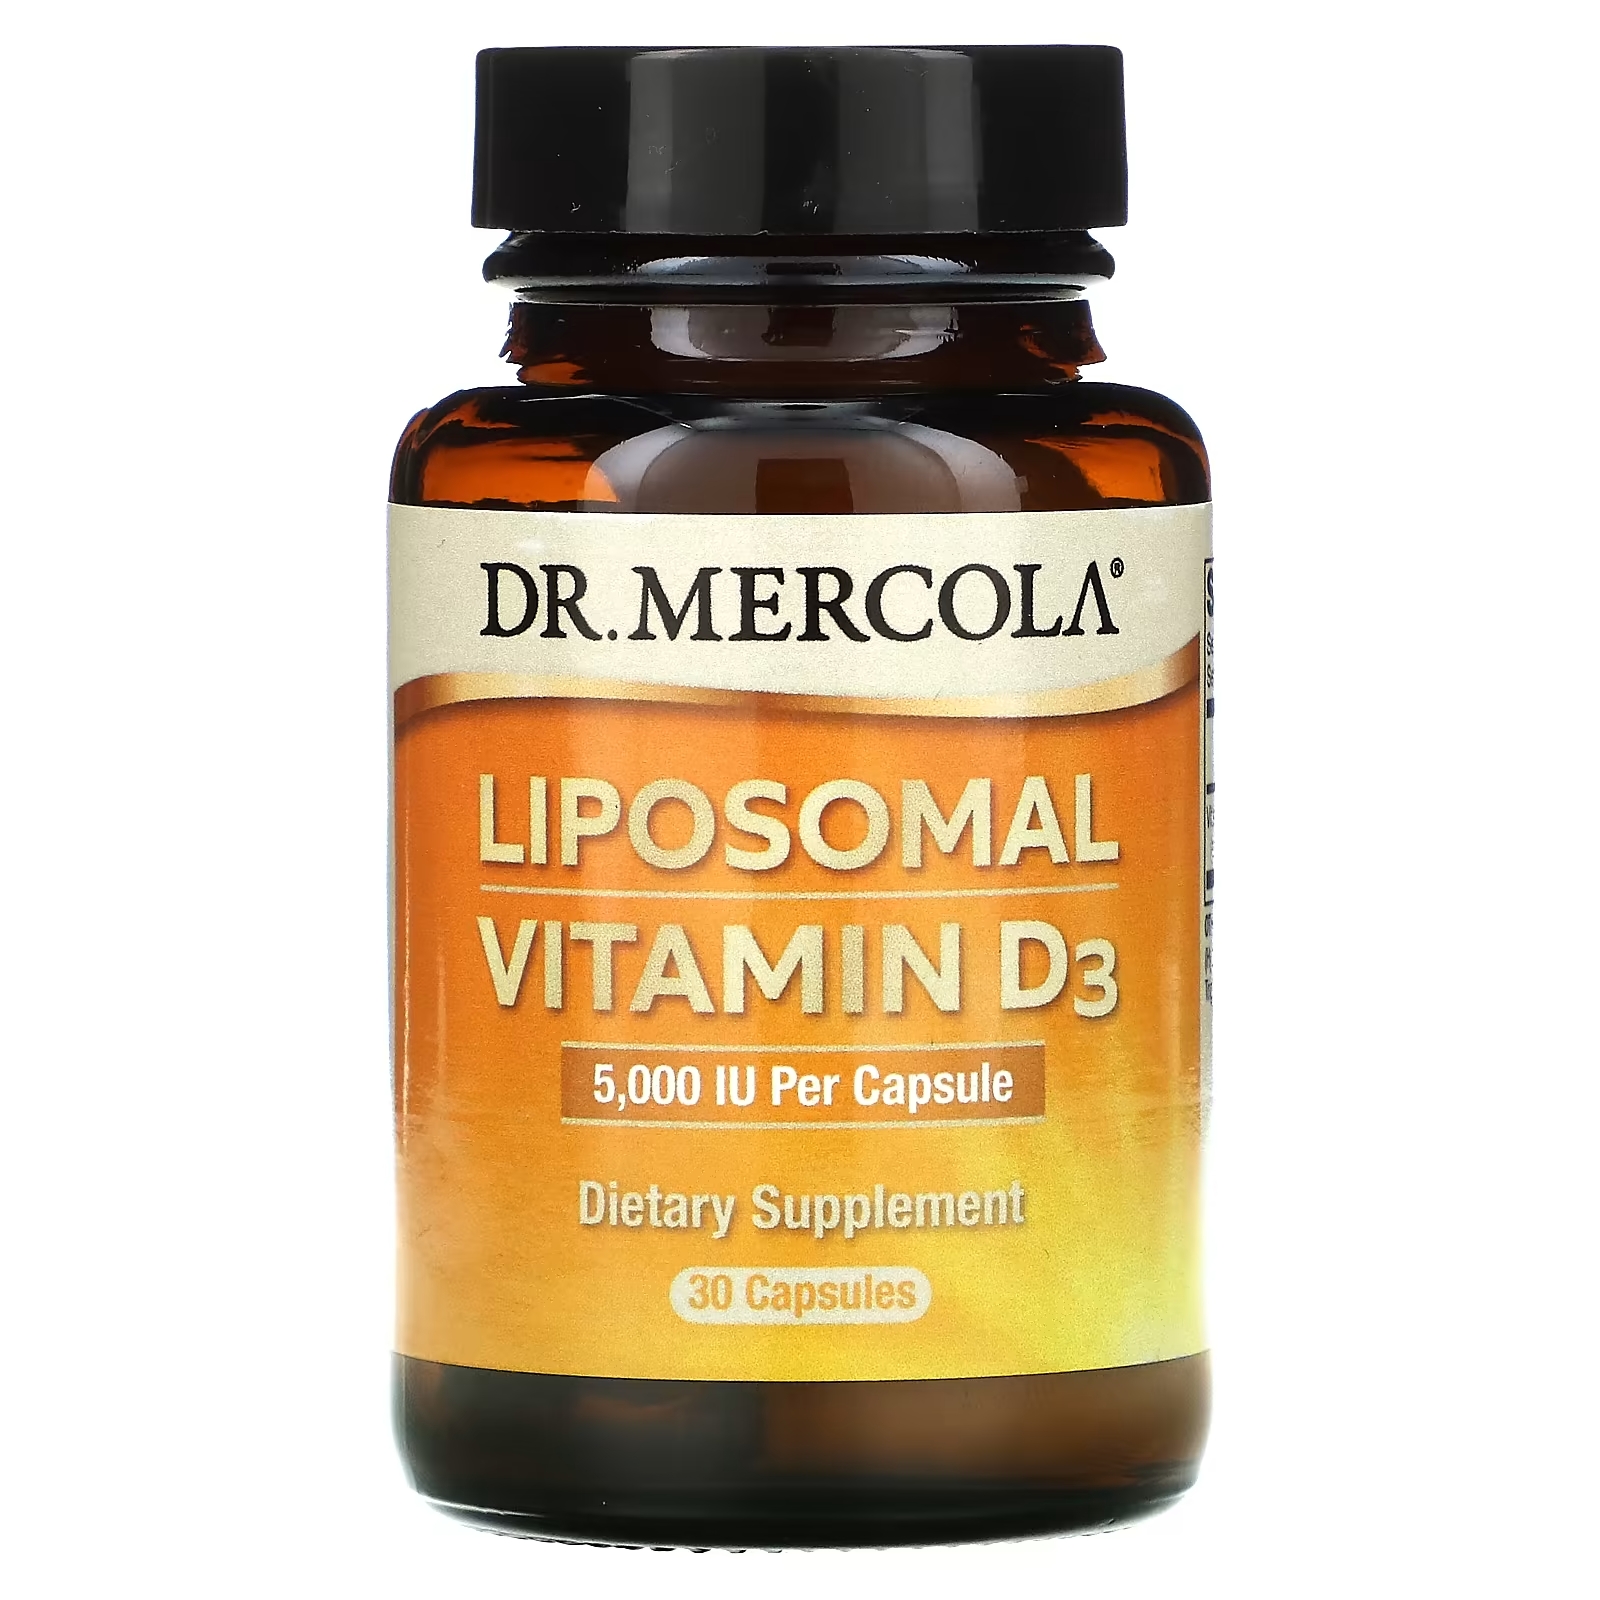 Dr. Mercola липосомальный витамин D3 5000 МЕ, 30 капсул dr mercola липосомальный витамин c для детей 30 капсул